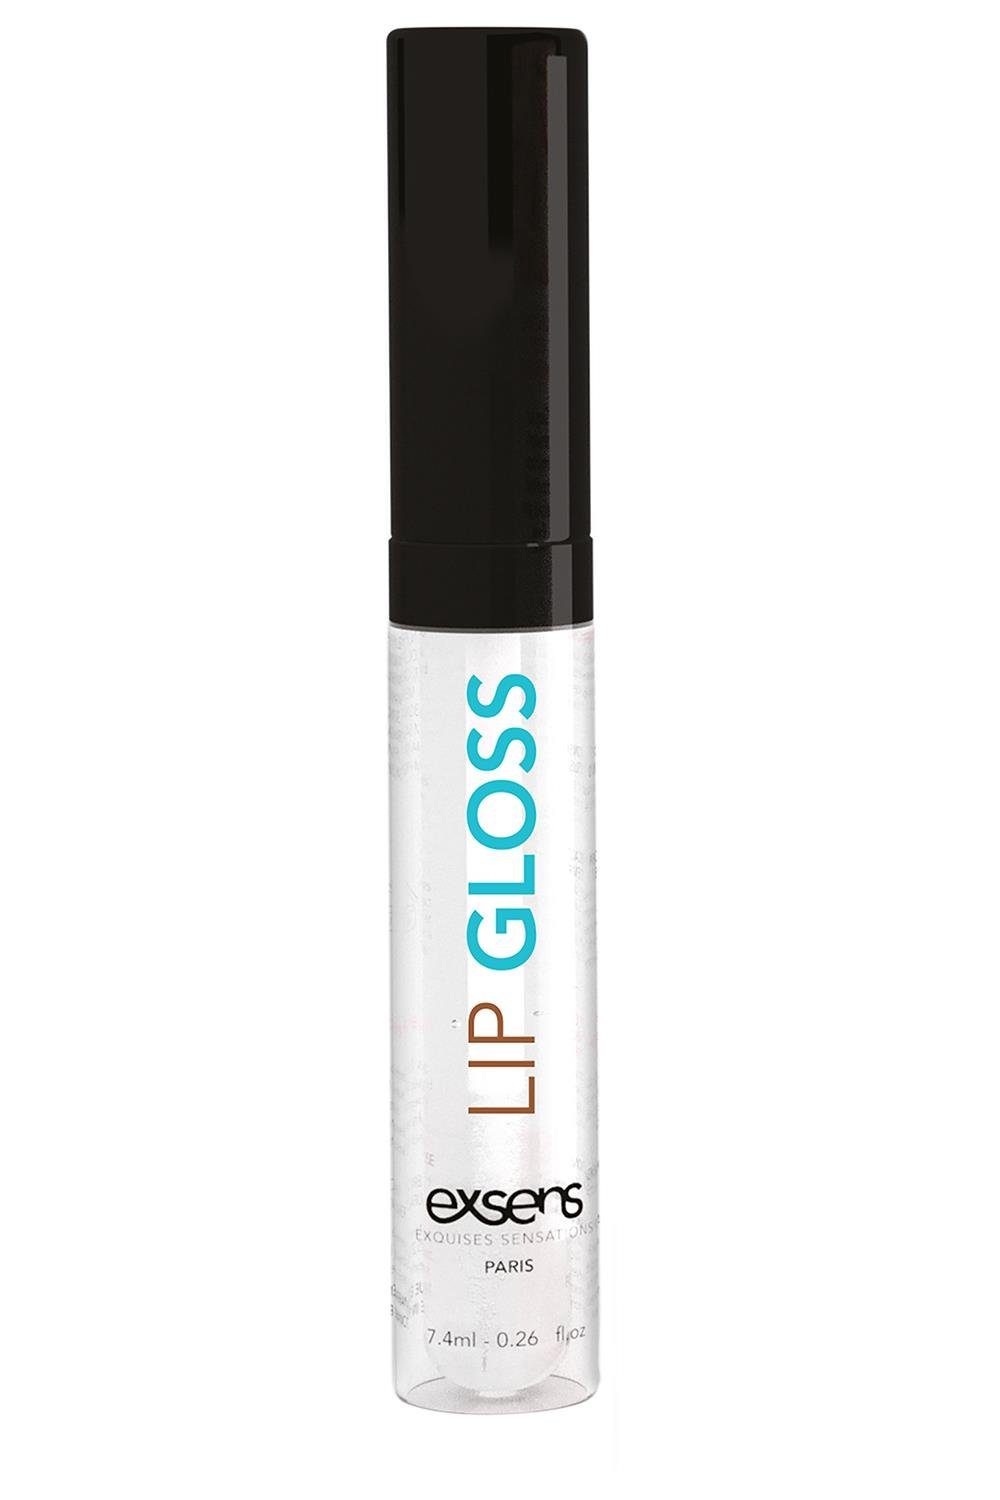 Exsens Lipgloss Exsens Hot Kiss Lip Gloss Coconut 7,4ml, Farblos, nicht klebrig